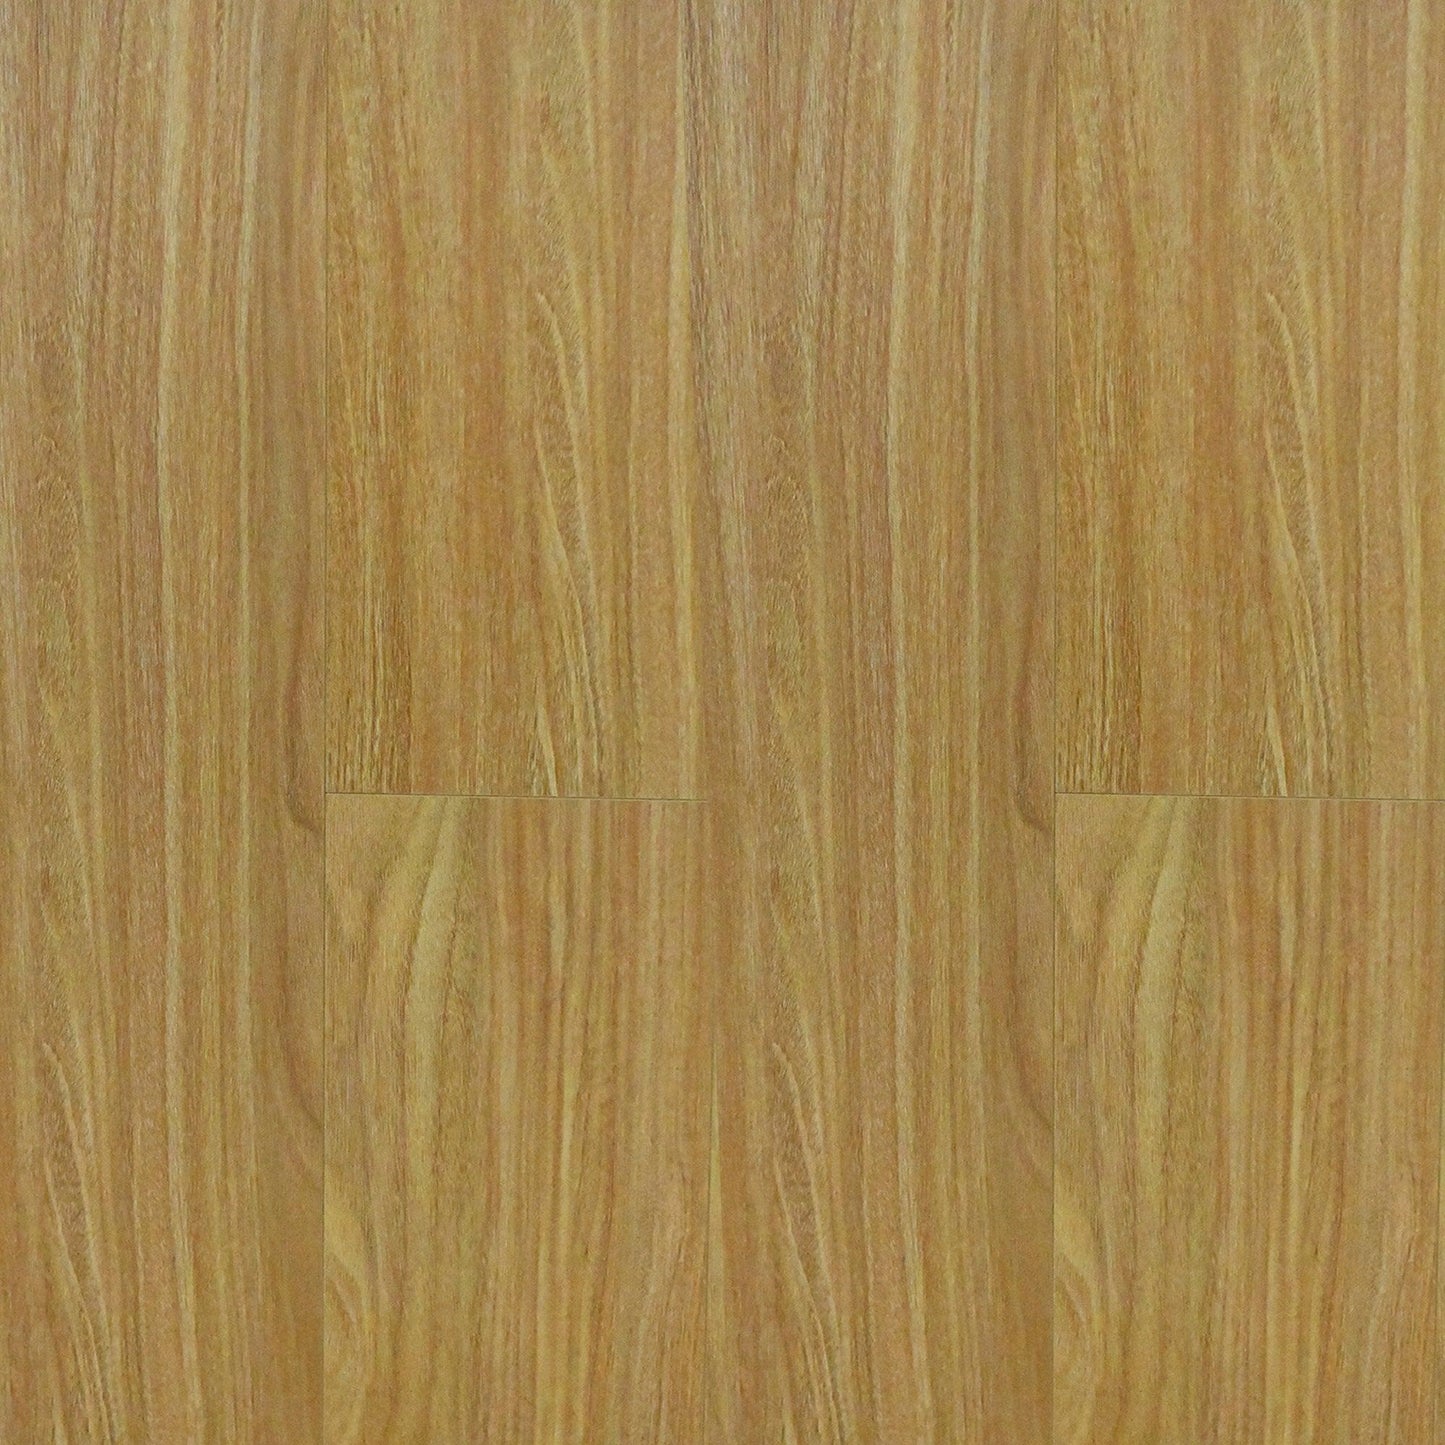 Birch Laminate Flooring by KLD Home